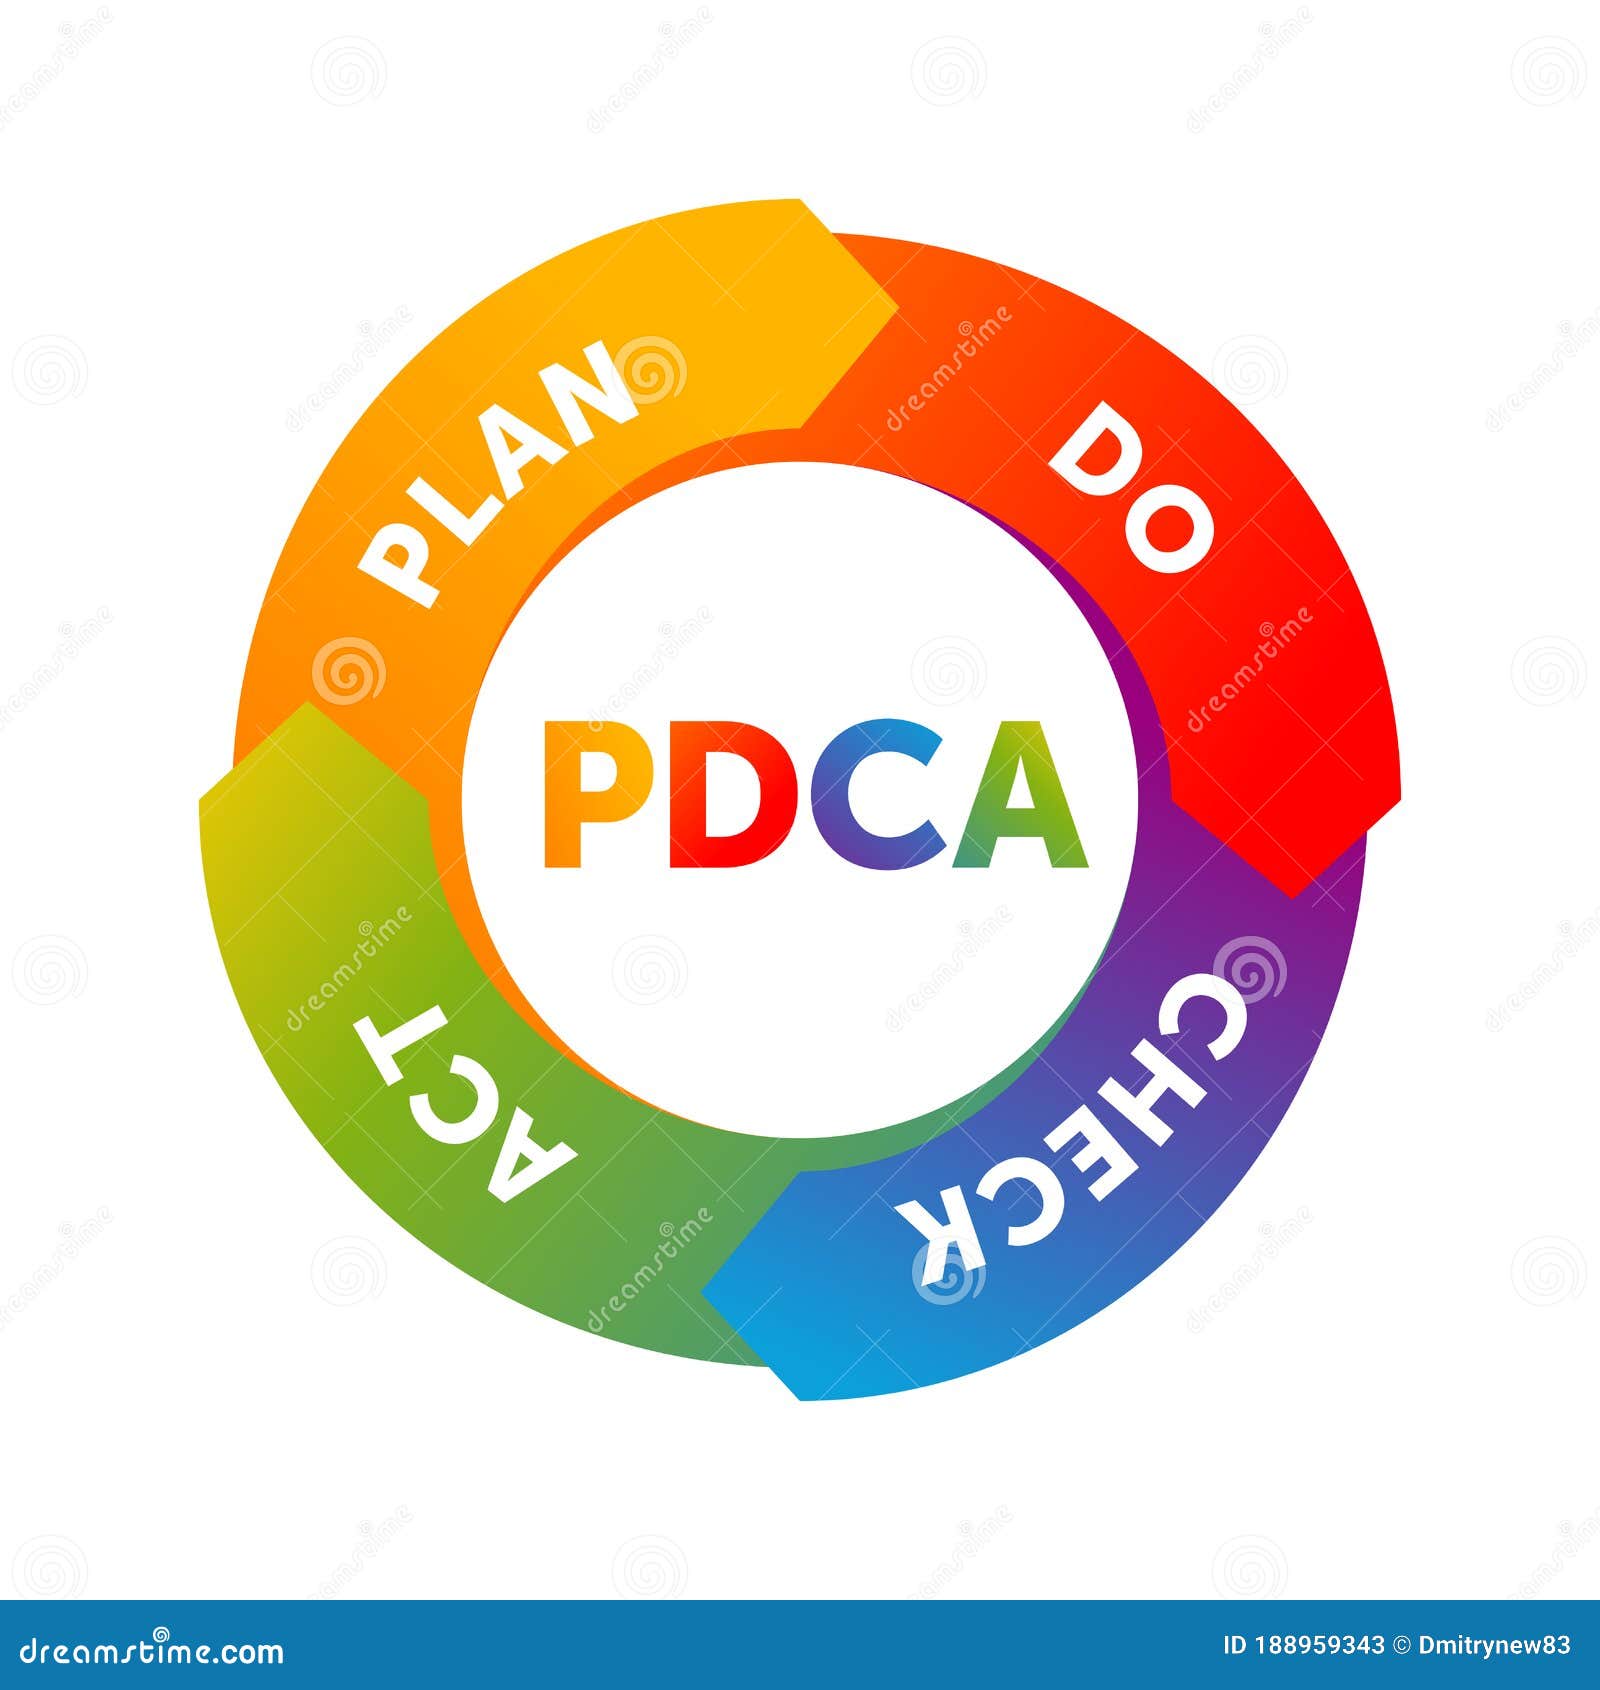 pdca cycle plan-do-check-act circle